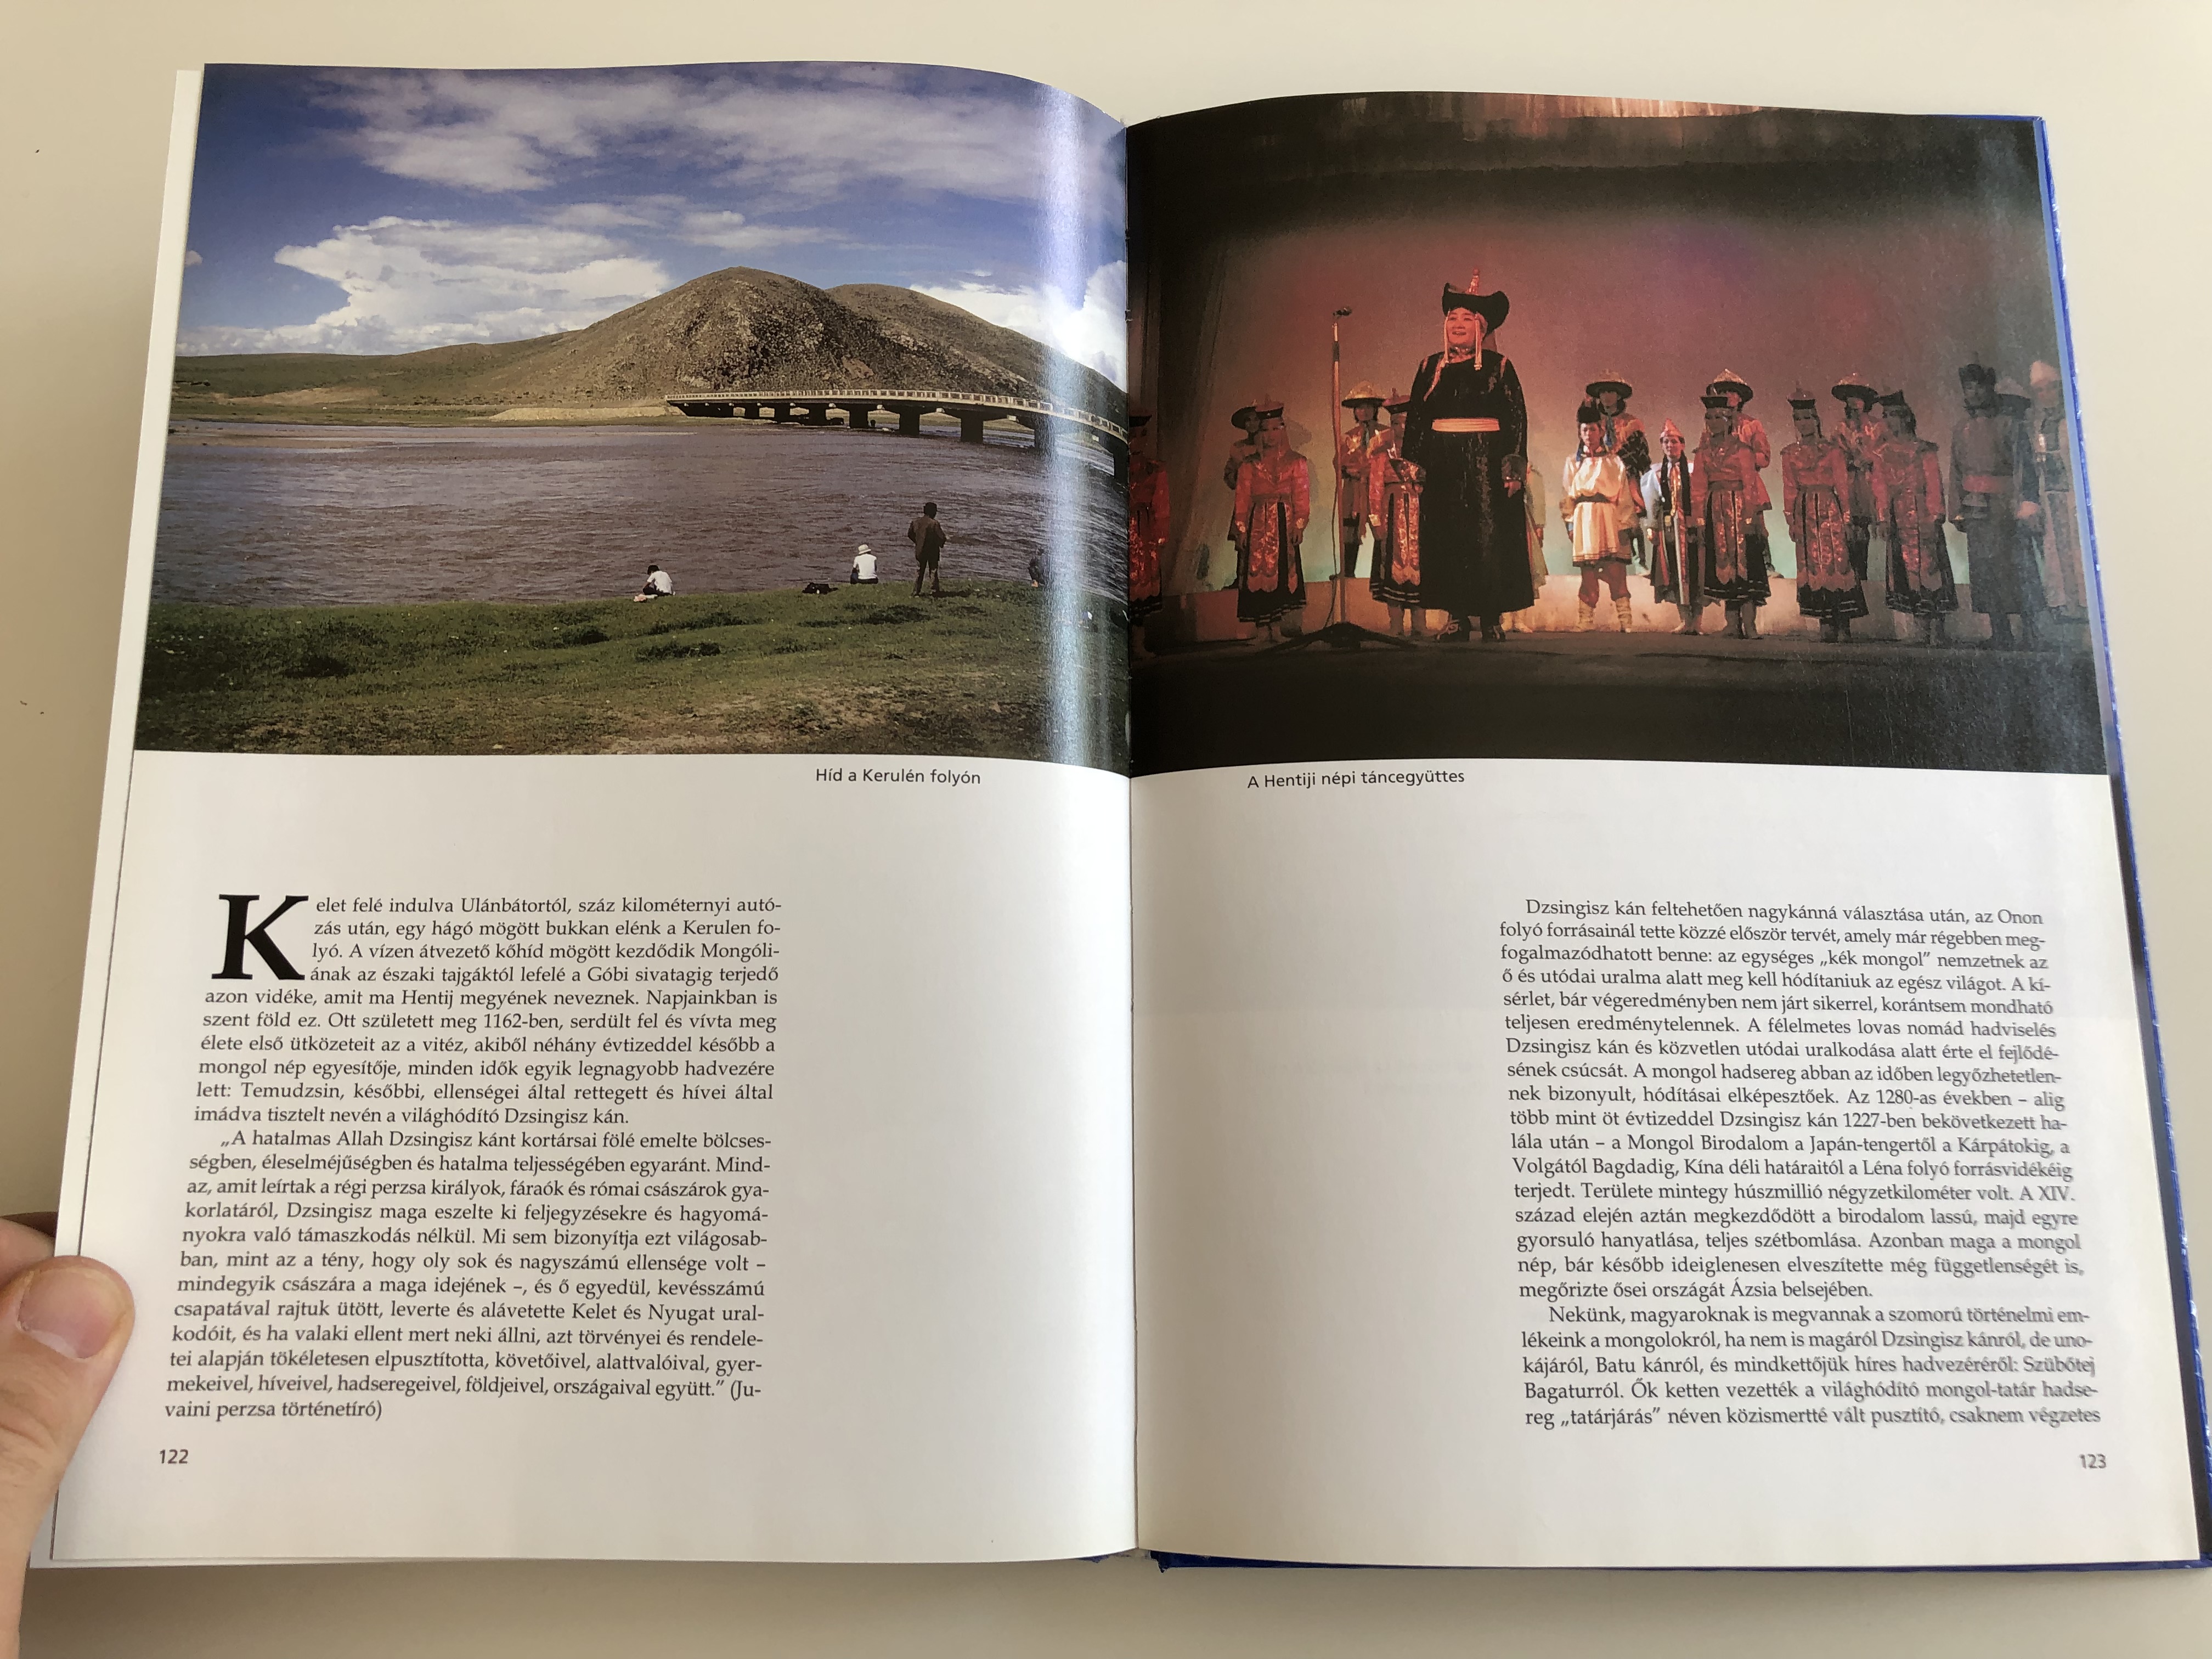 julianus-nyomdokain-zsi-ban-by-benk-mih-ly-f-nyk-pez-g-pes-barangol-sok-mong-li-ban-photographical-journey-through-mongolia-timp-kiad-2001-14-.jpg